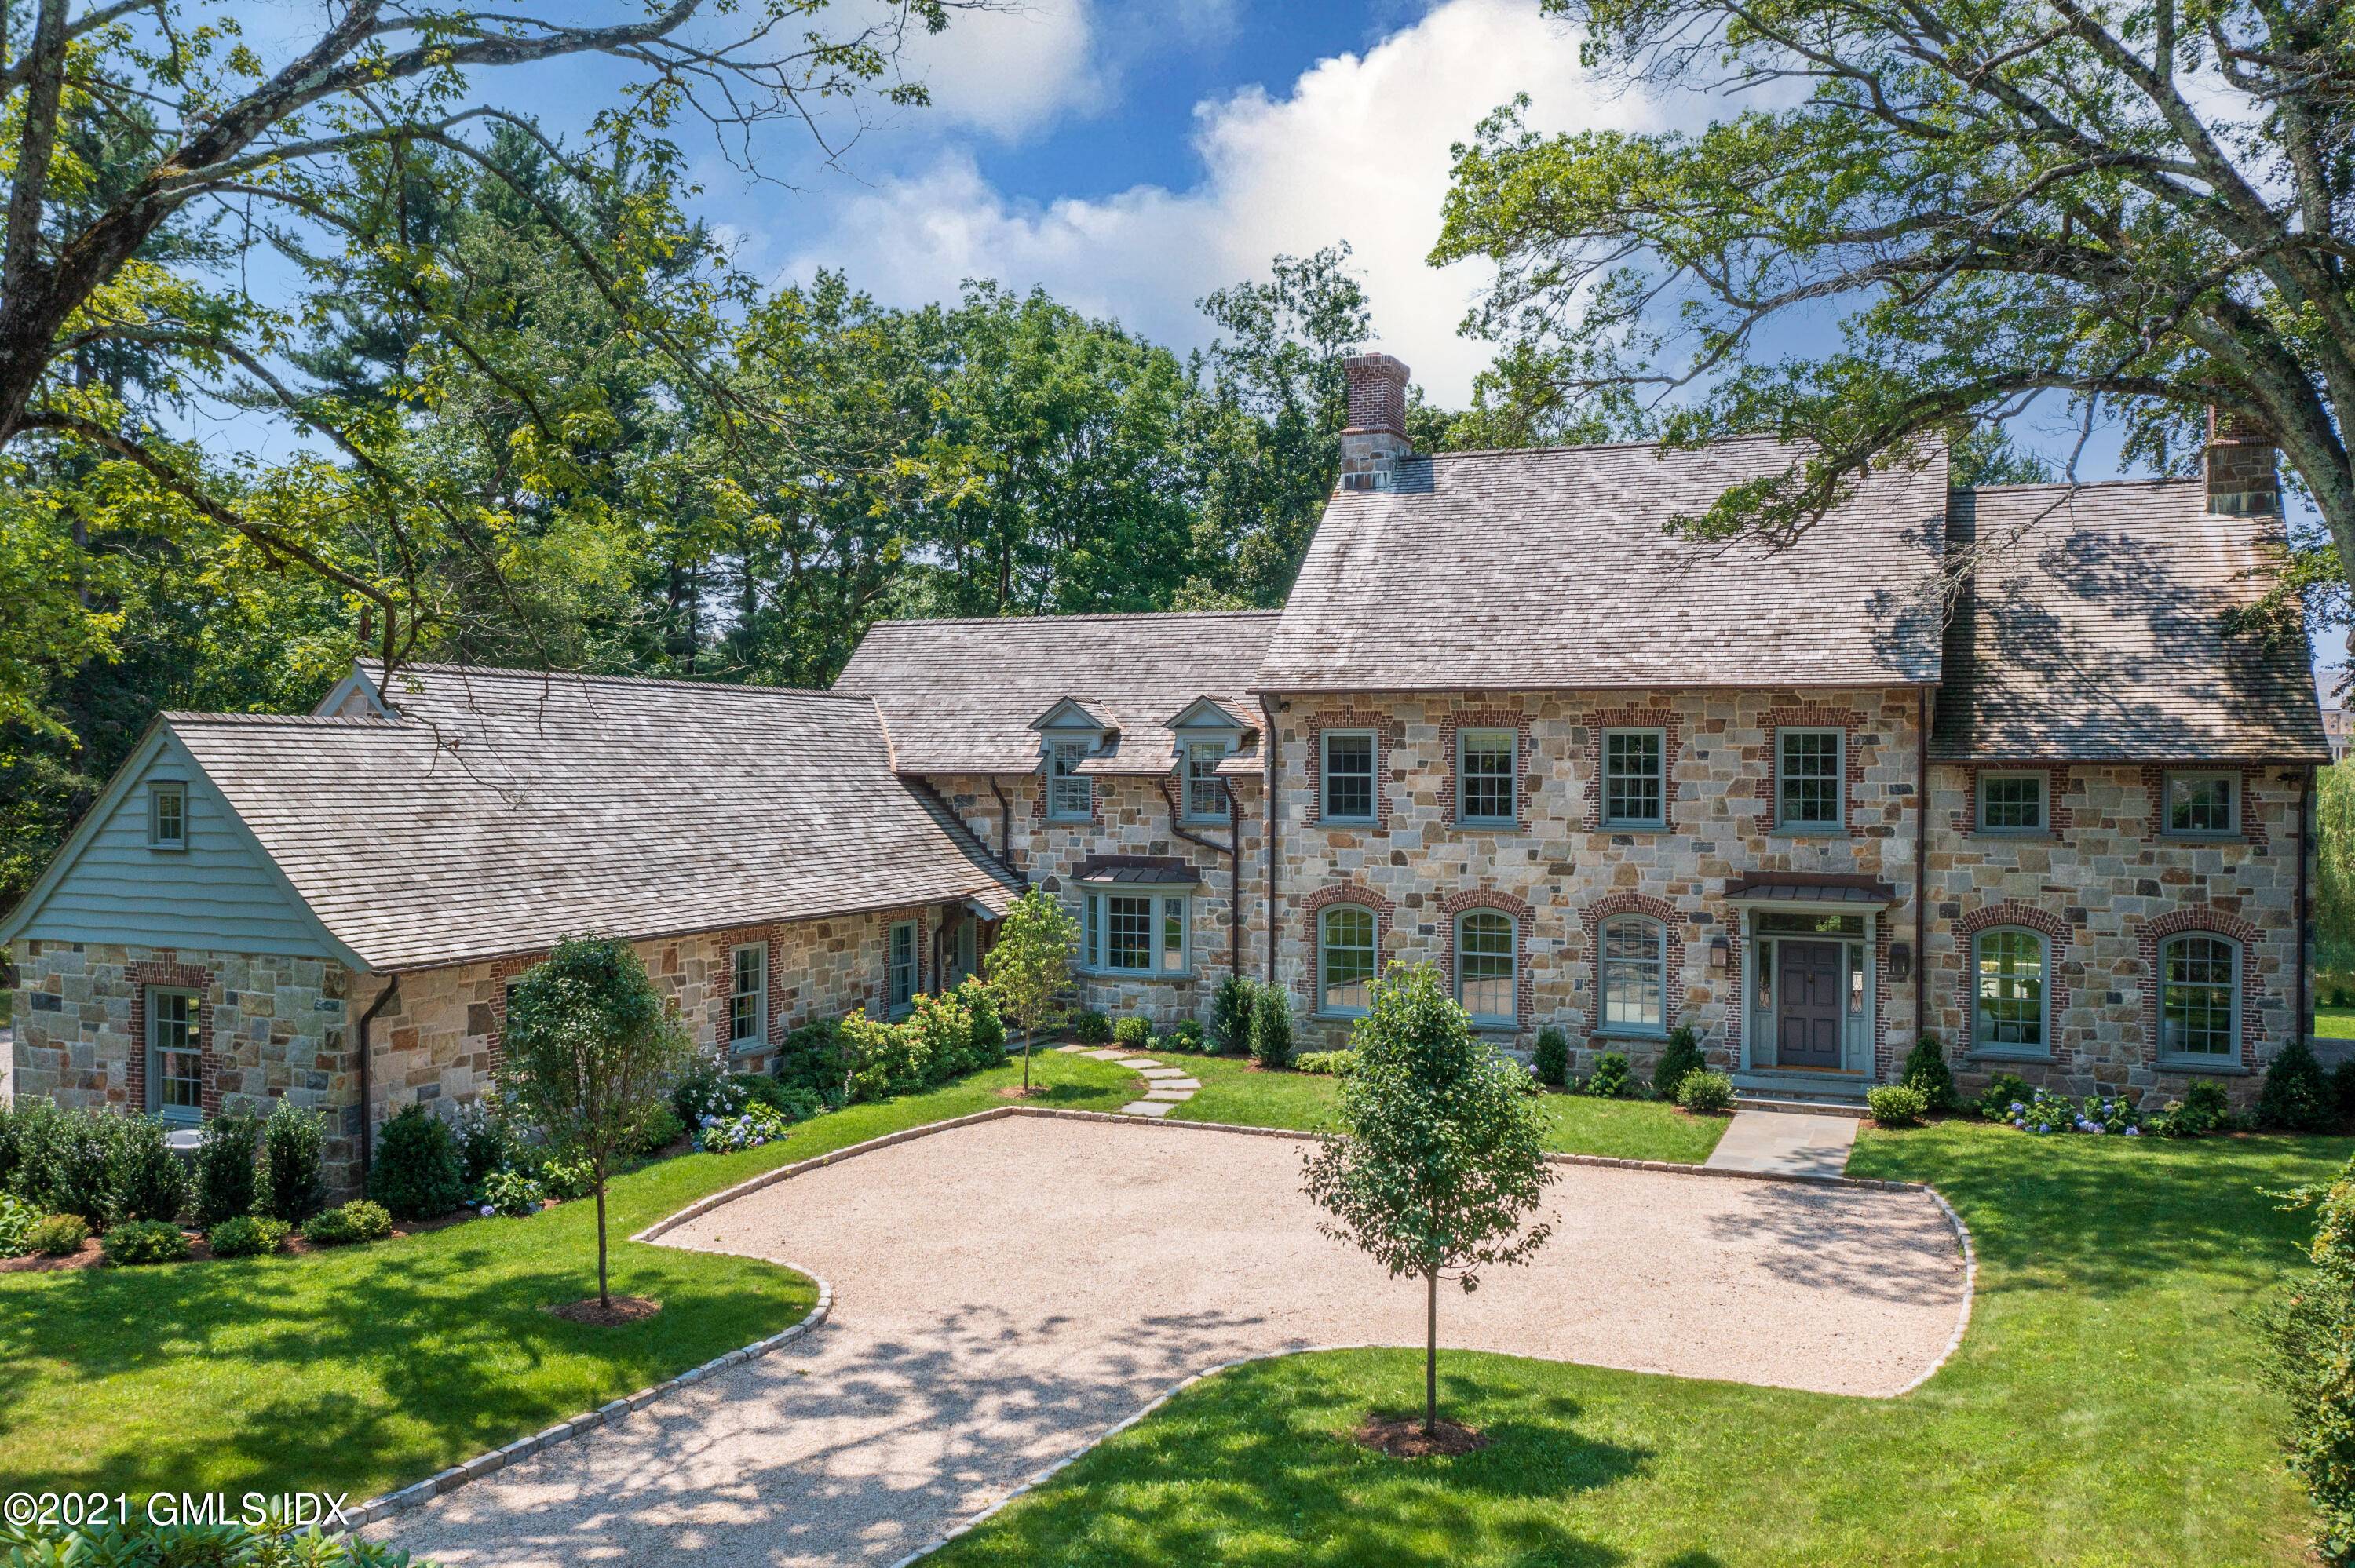 Exquisite new custom home by eminent architect Doug VanderHorn on the site of the Vanderbilt estate.